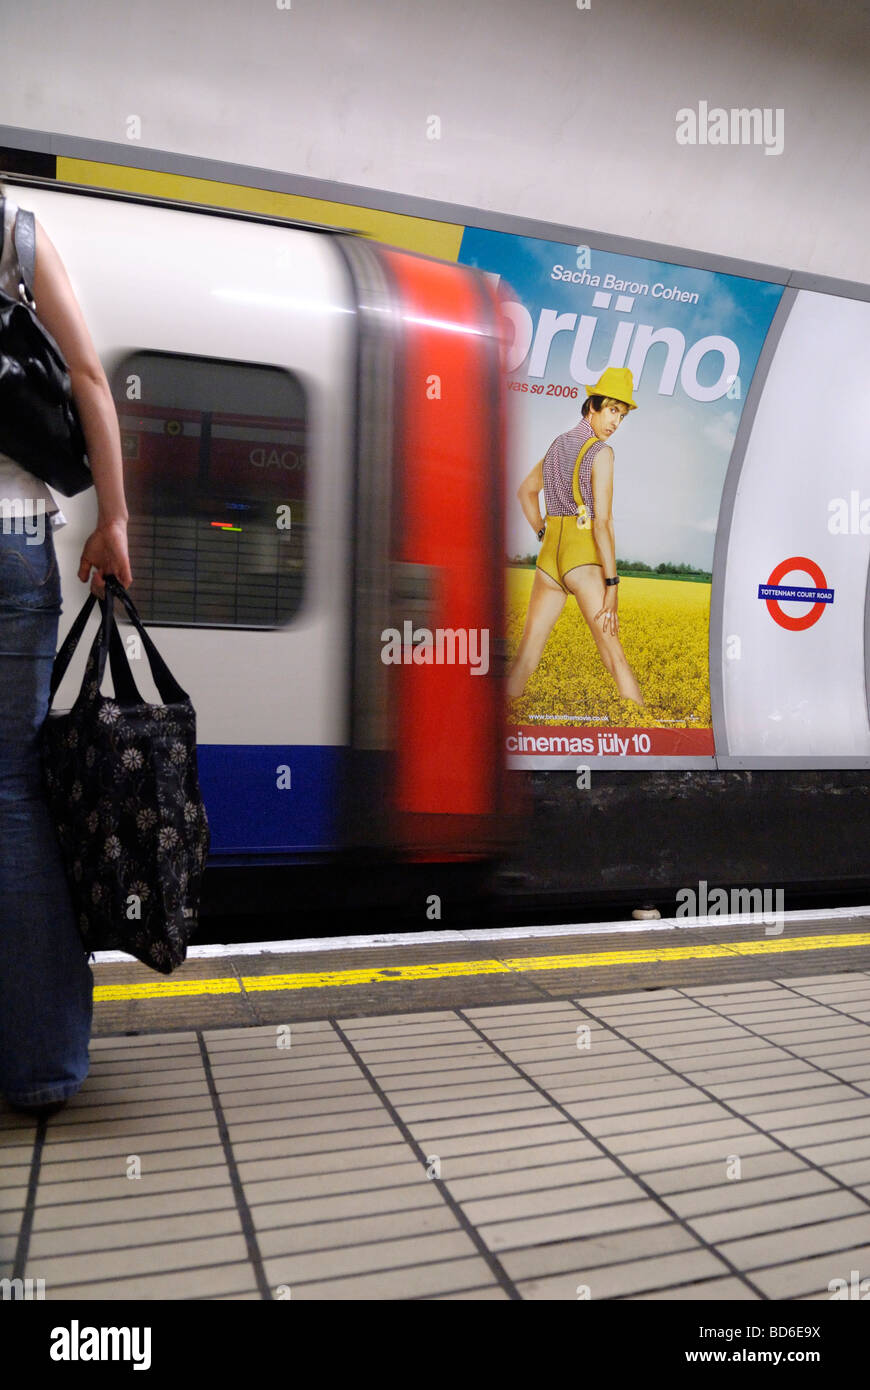 Bruno Film Poster on London Underground London Britain Stock Photo